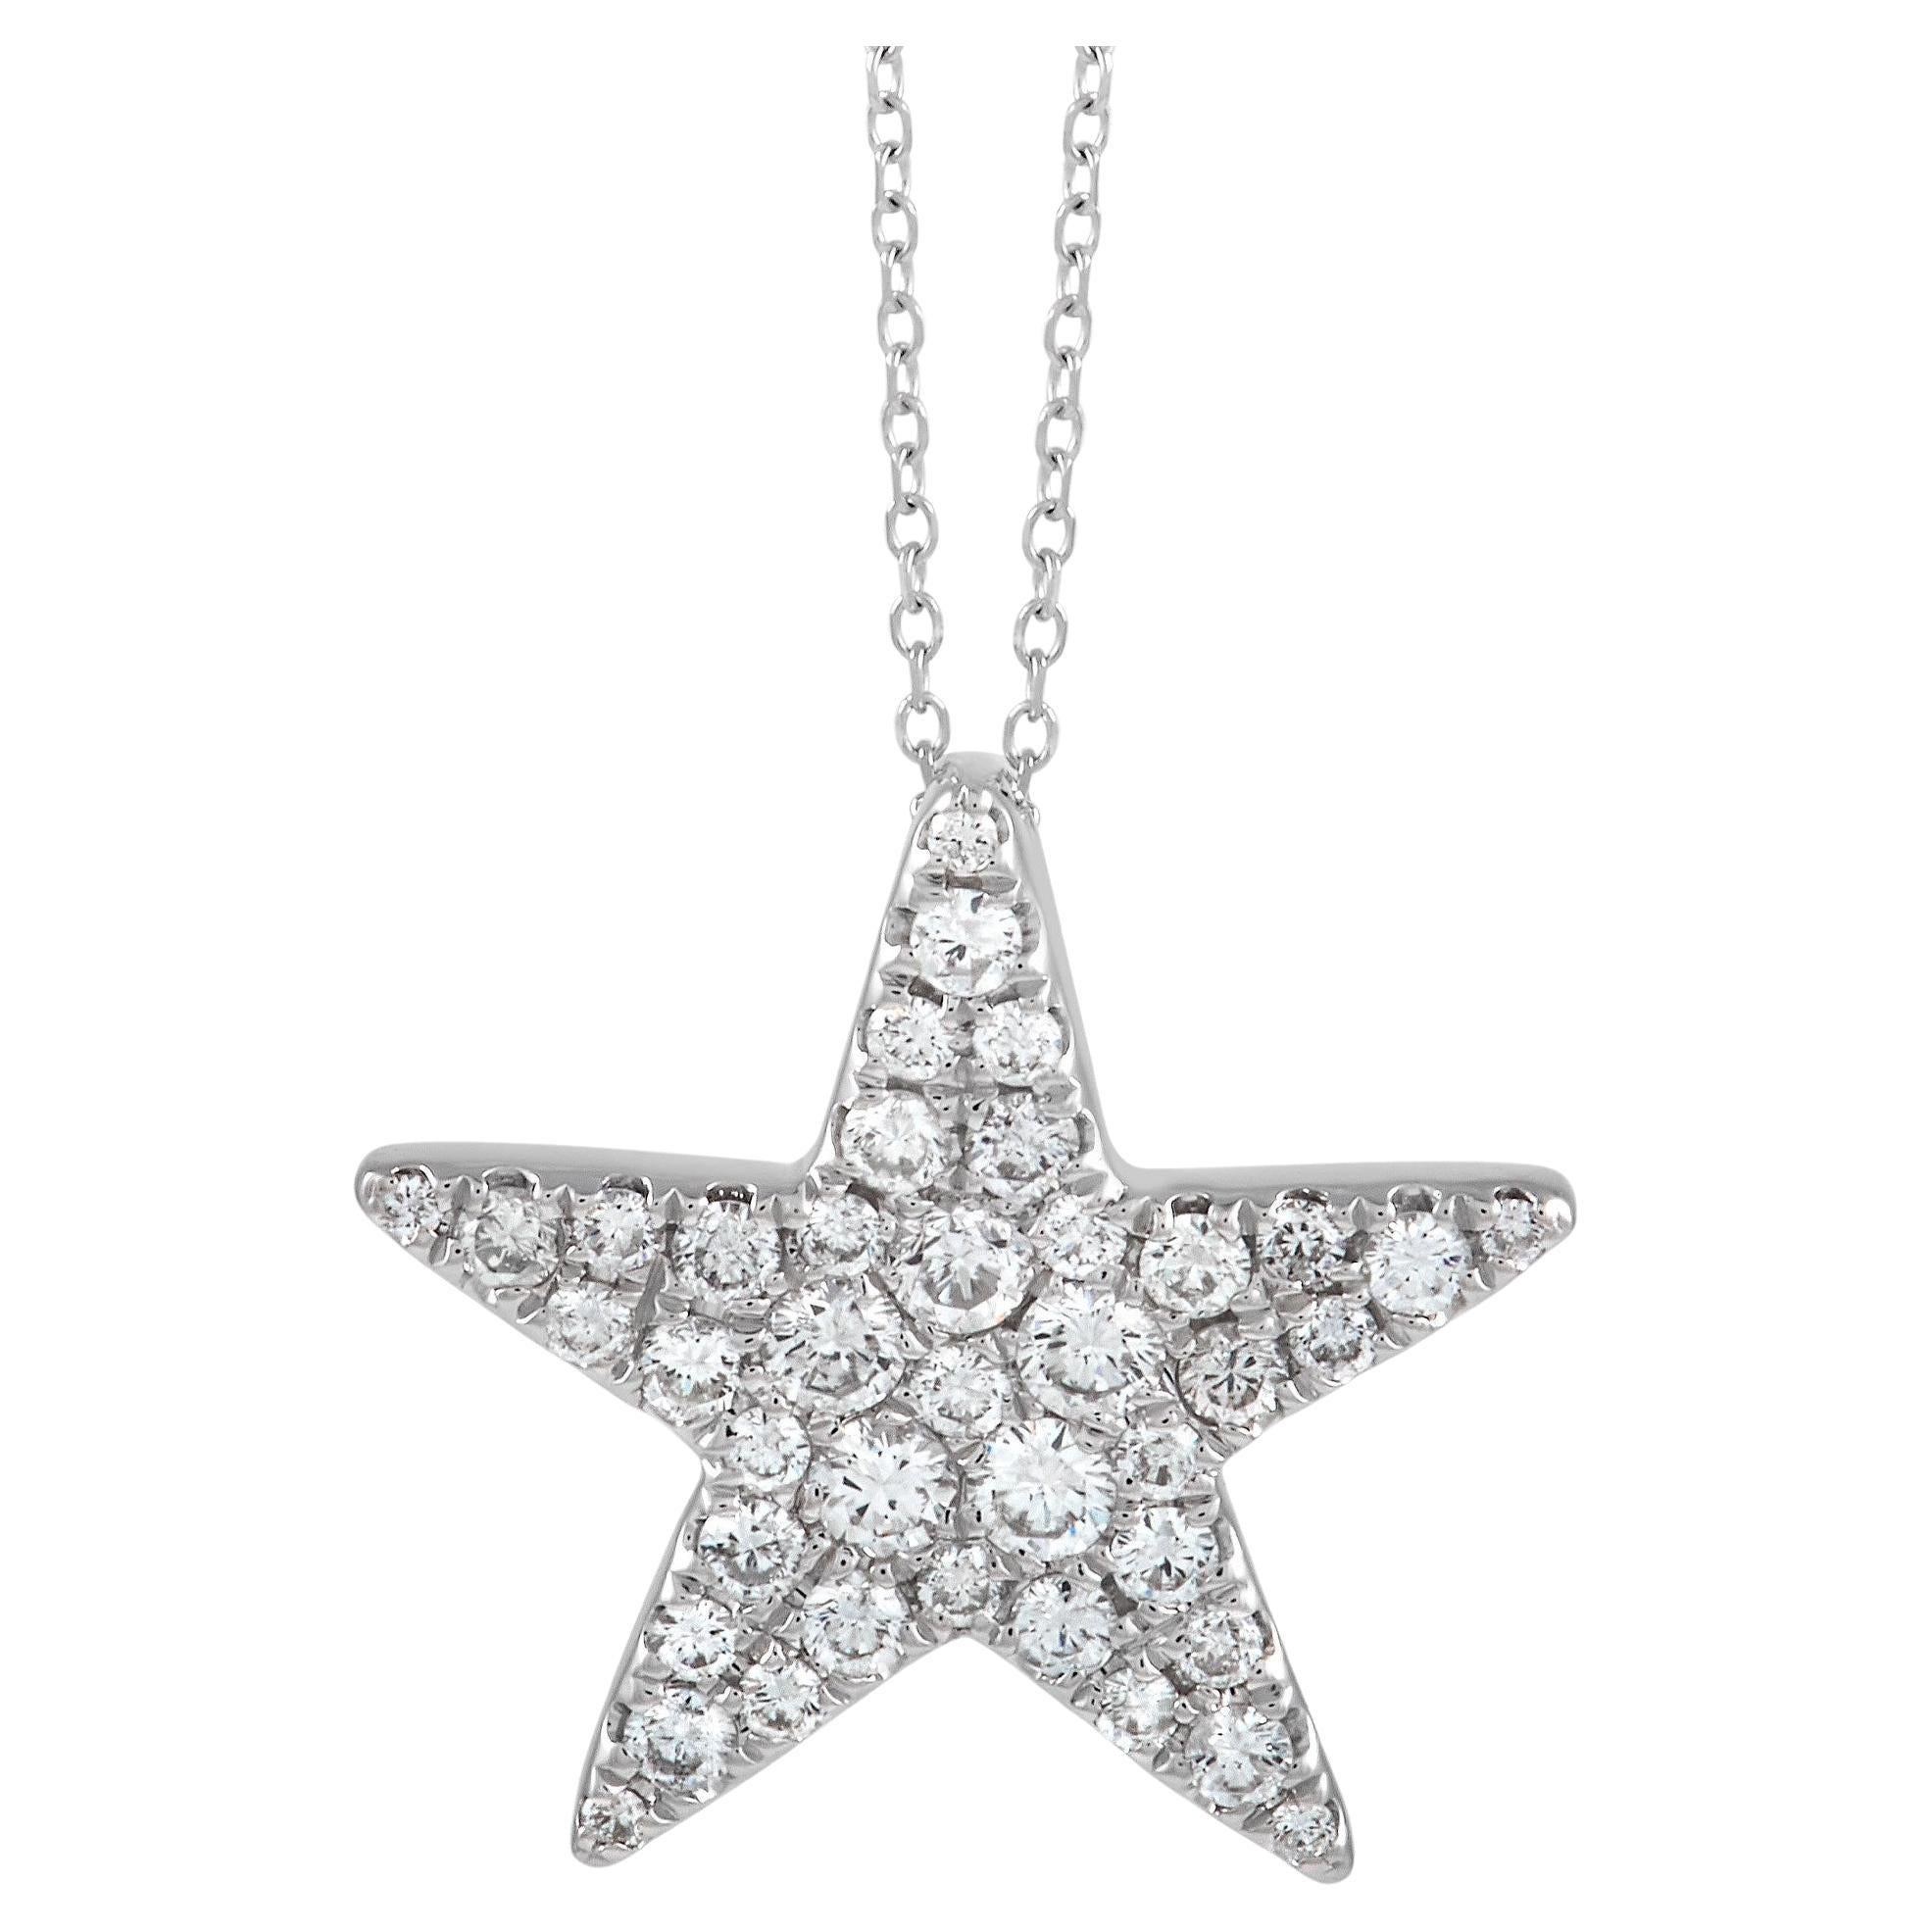 LB Exclusive 18K White Gold 1.00 Ct Diamond Star Necklace